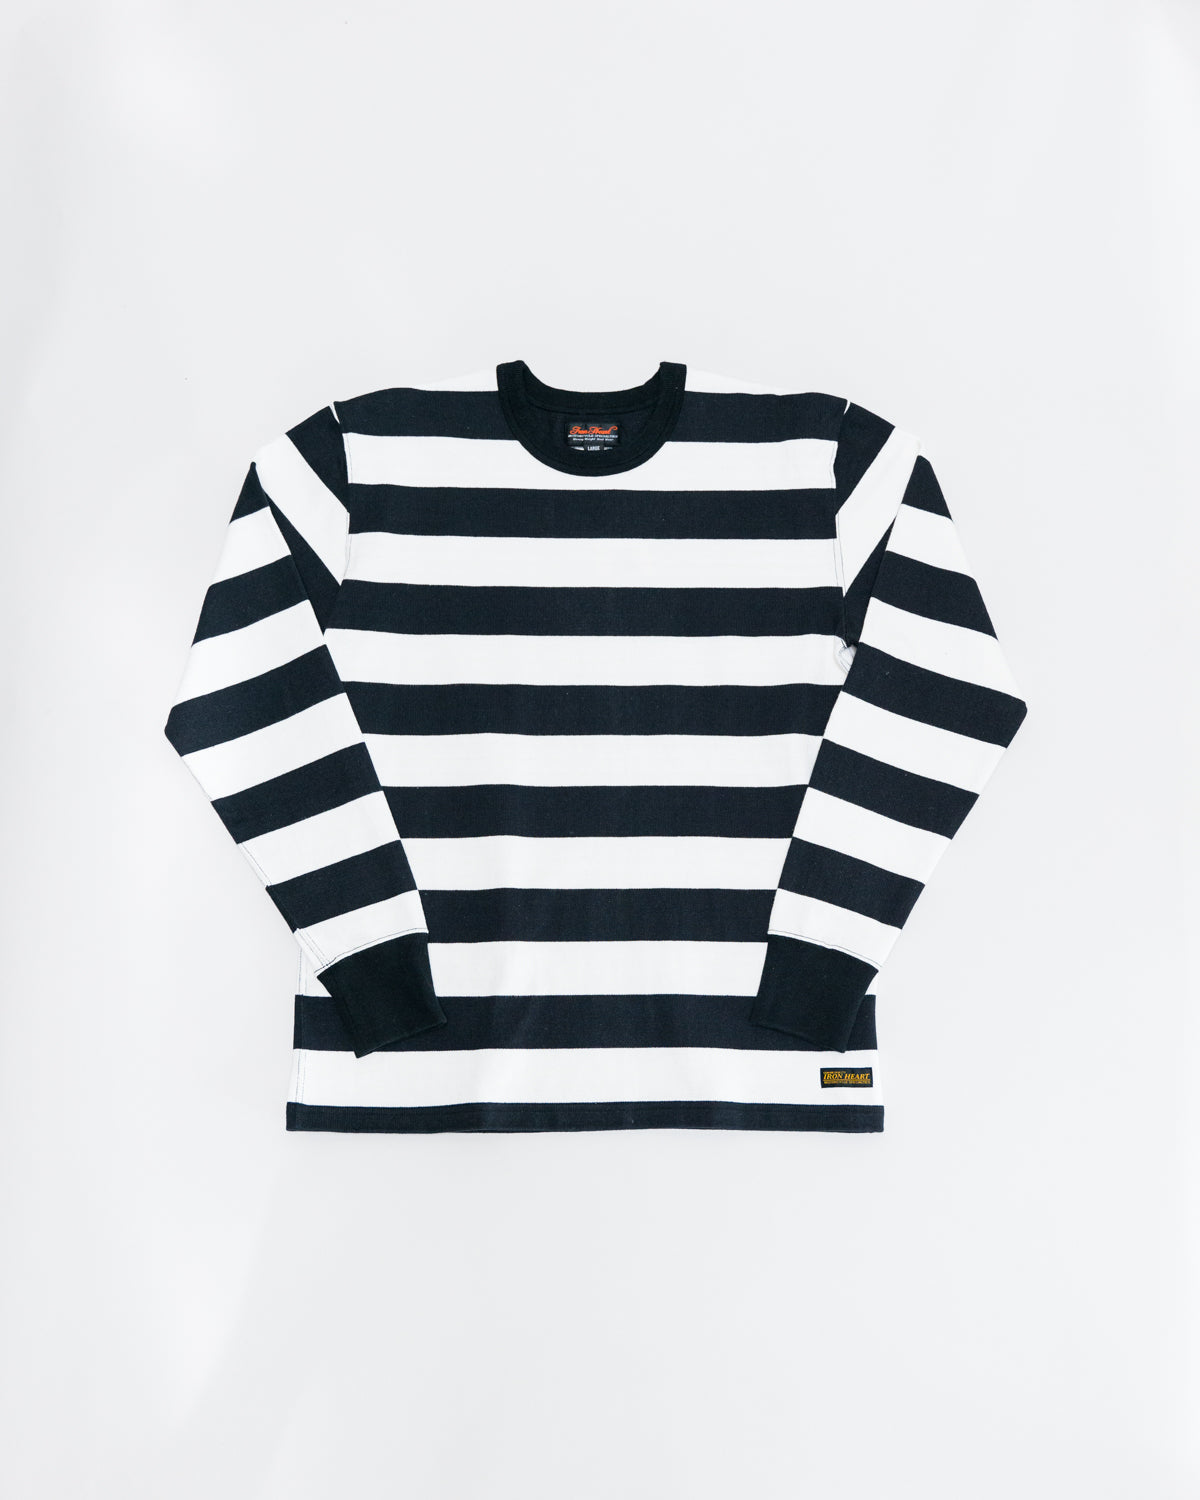 IHTB-01-BLK-WHT - 11oz Cotton Knit Long-Sleeved Sweater - Black, White